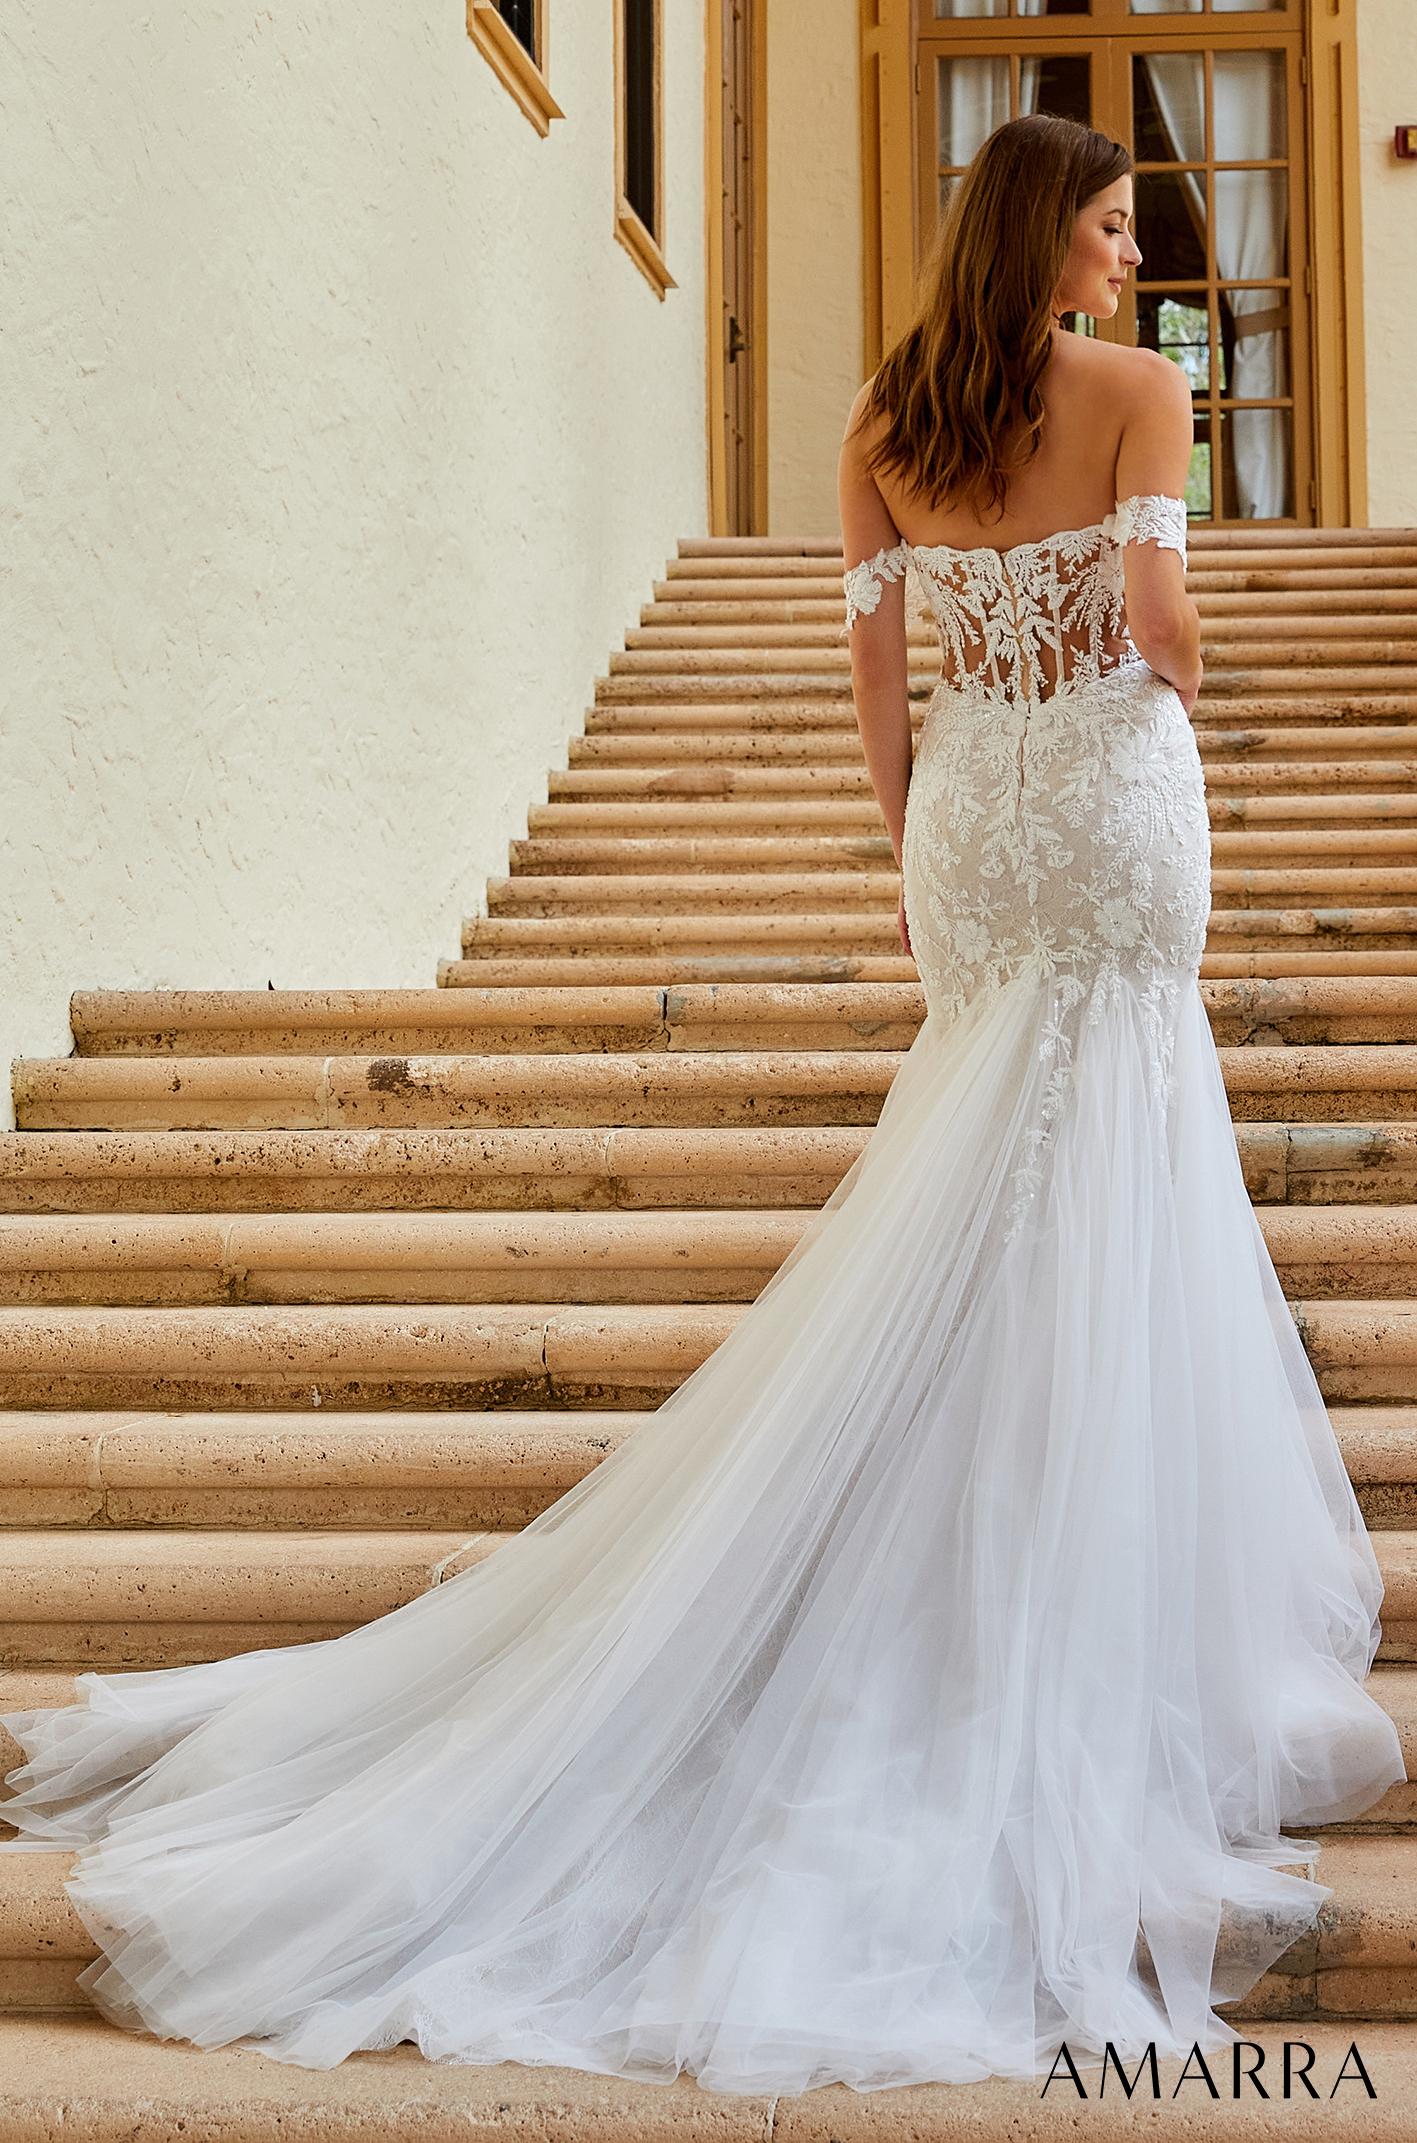 Wide Off-the-shoulder Wedding Dresses with Flare Skirt